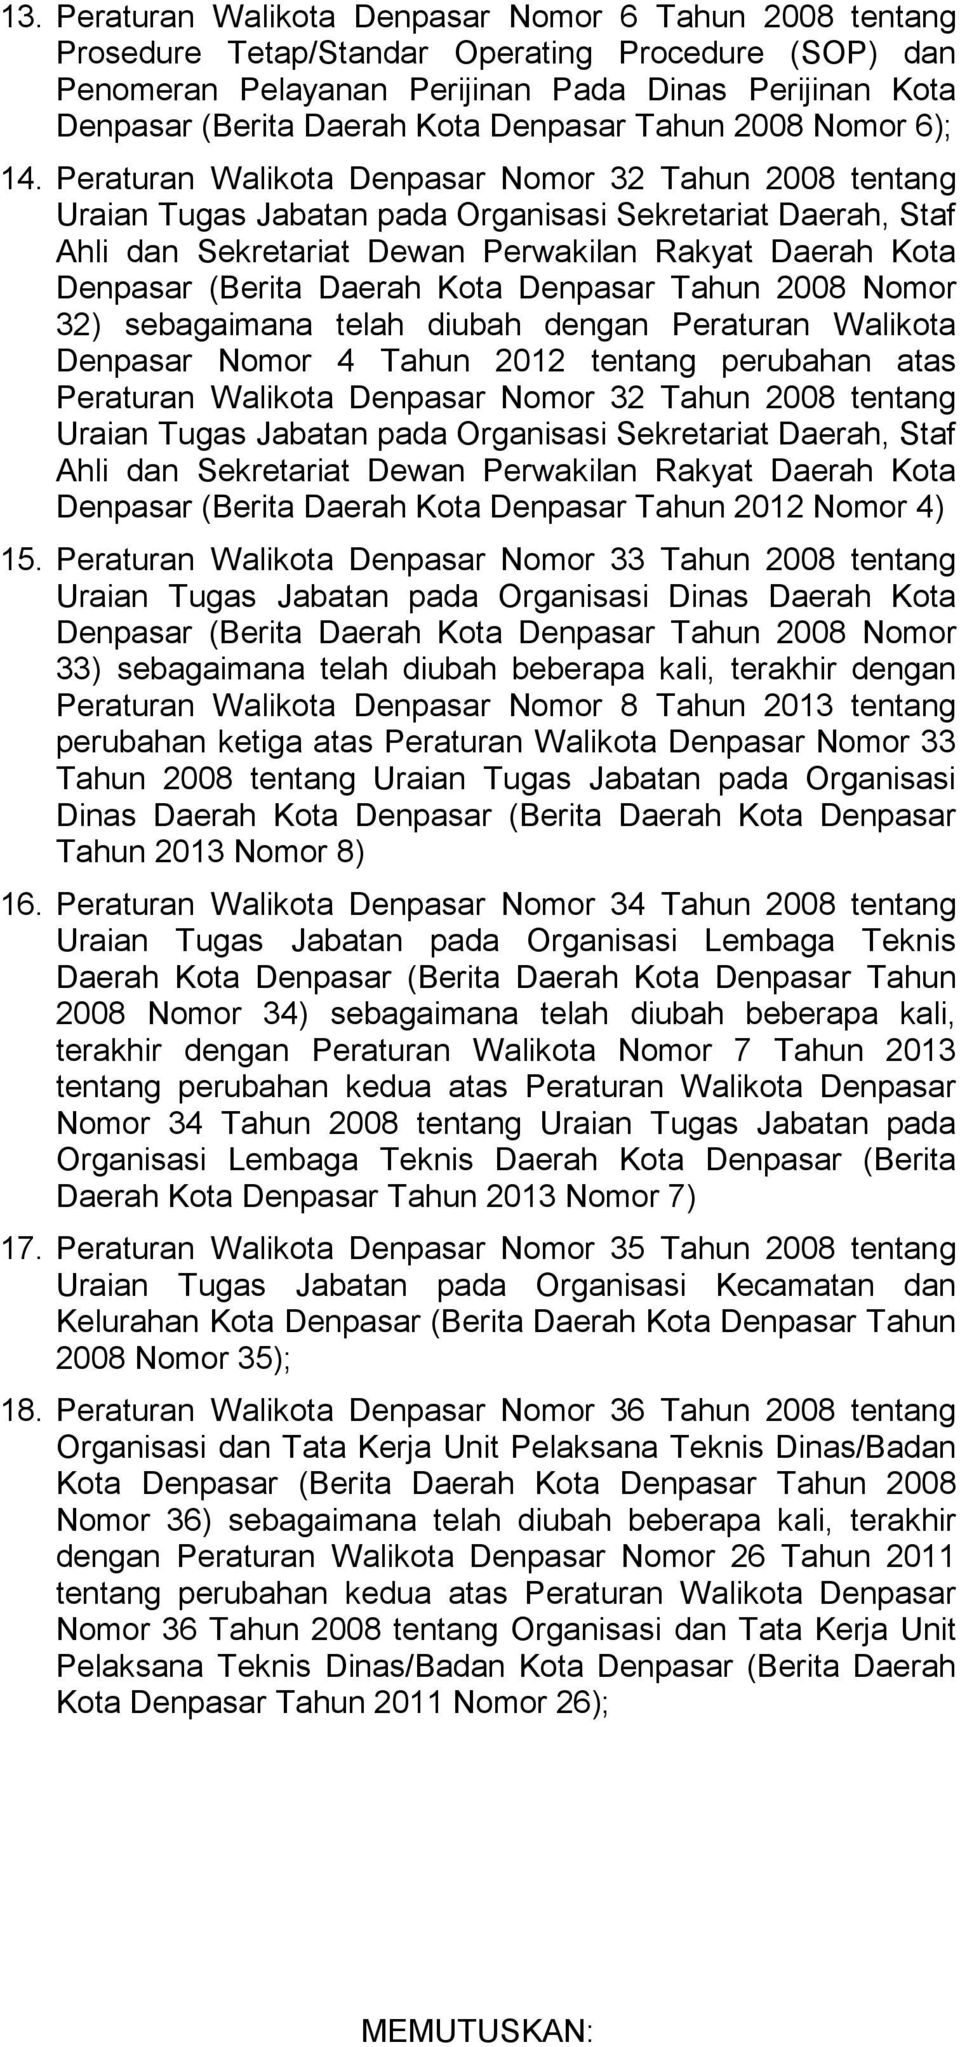 Peraturan Walikota Denpasar Nomor 32 Tahun 2008 tentang Uraian Tugas Jabatan pada Organisasi Sekretariat Daerah, Staf Ahli dan Sekretariat Dewan Perwakilan Rakyat Daerah Kota Denpasar (Berita Daerah